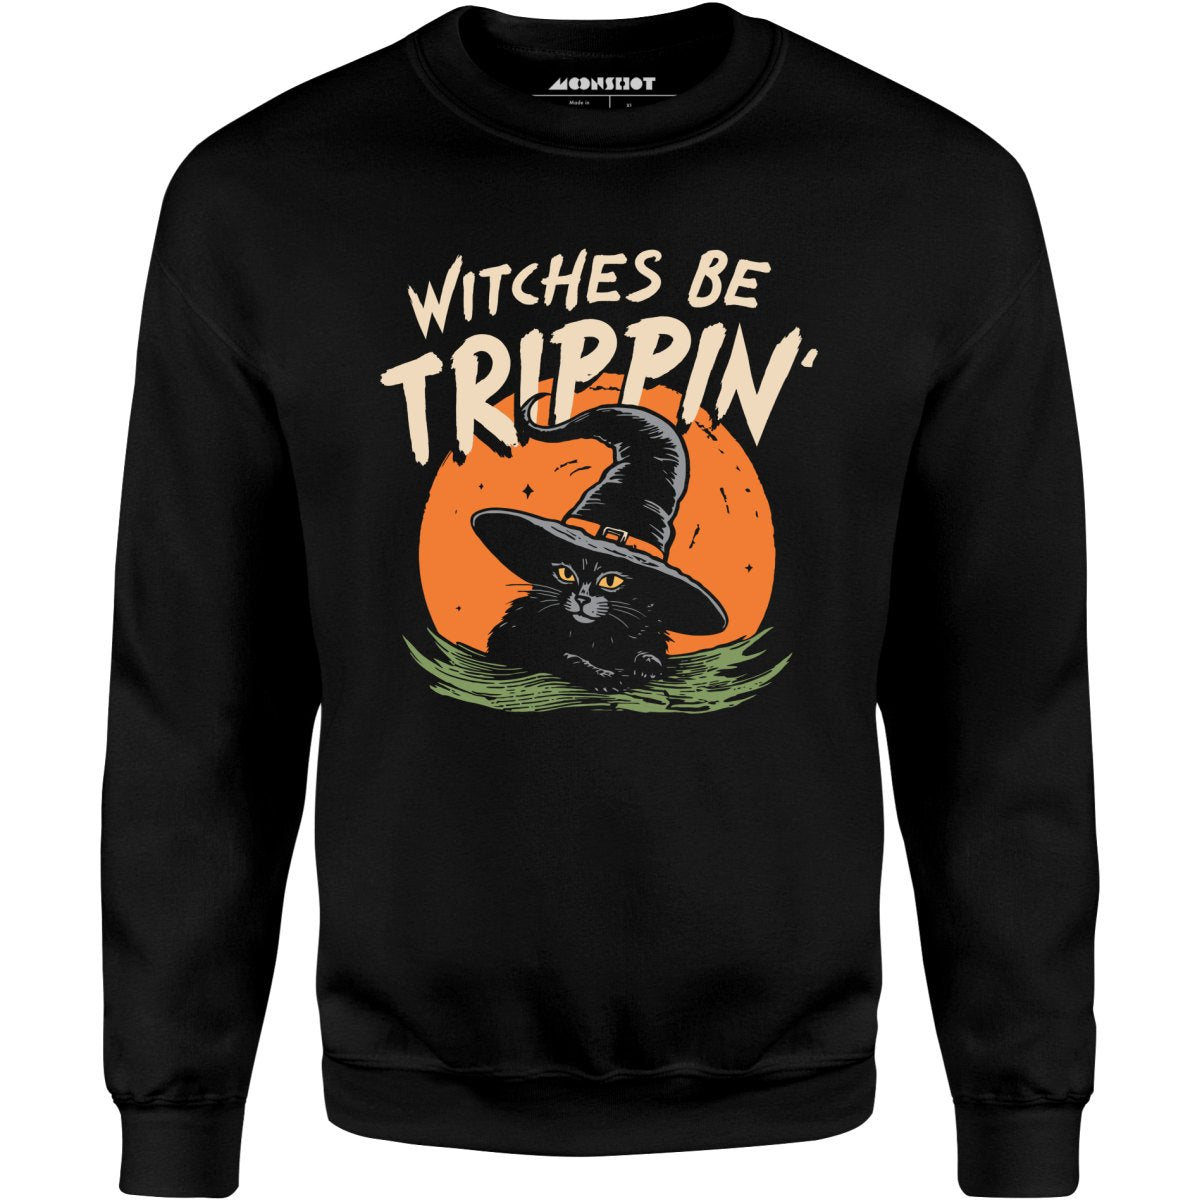 Witches Be Trippin' - Unisex Sweatshirt